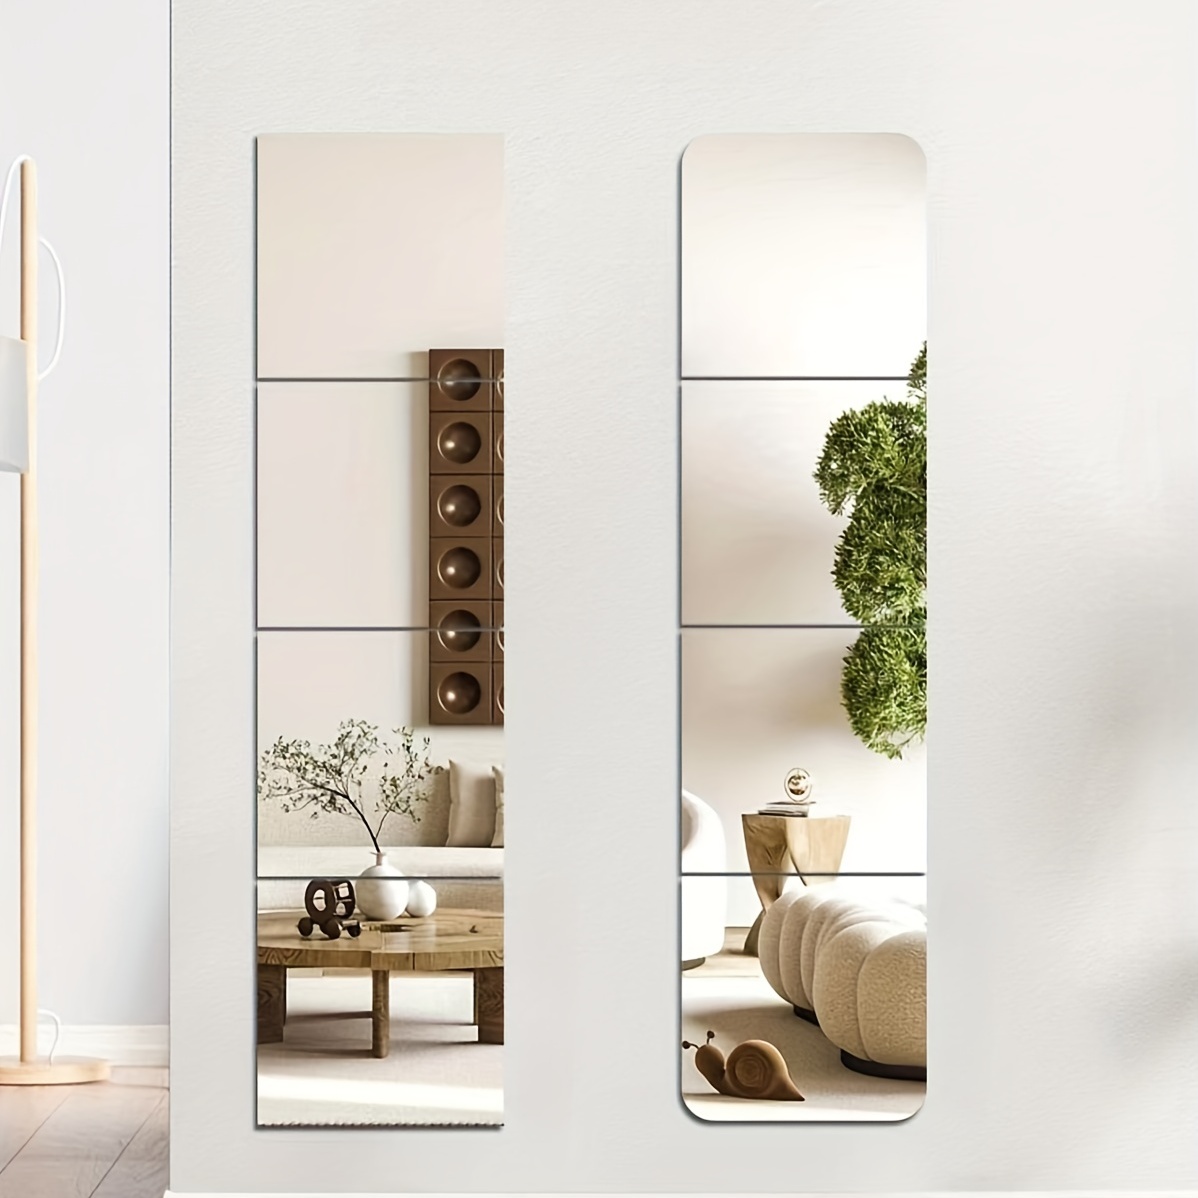 

4pcs Acrylic Mirror Non-glass Shatterproof Mirror Full Length Mirror Wall Mirror Frameless Home Fitness Mirror For Bedroom Bathroom Decor - Square